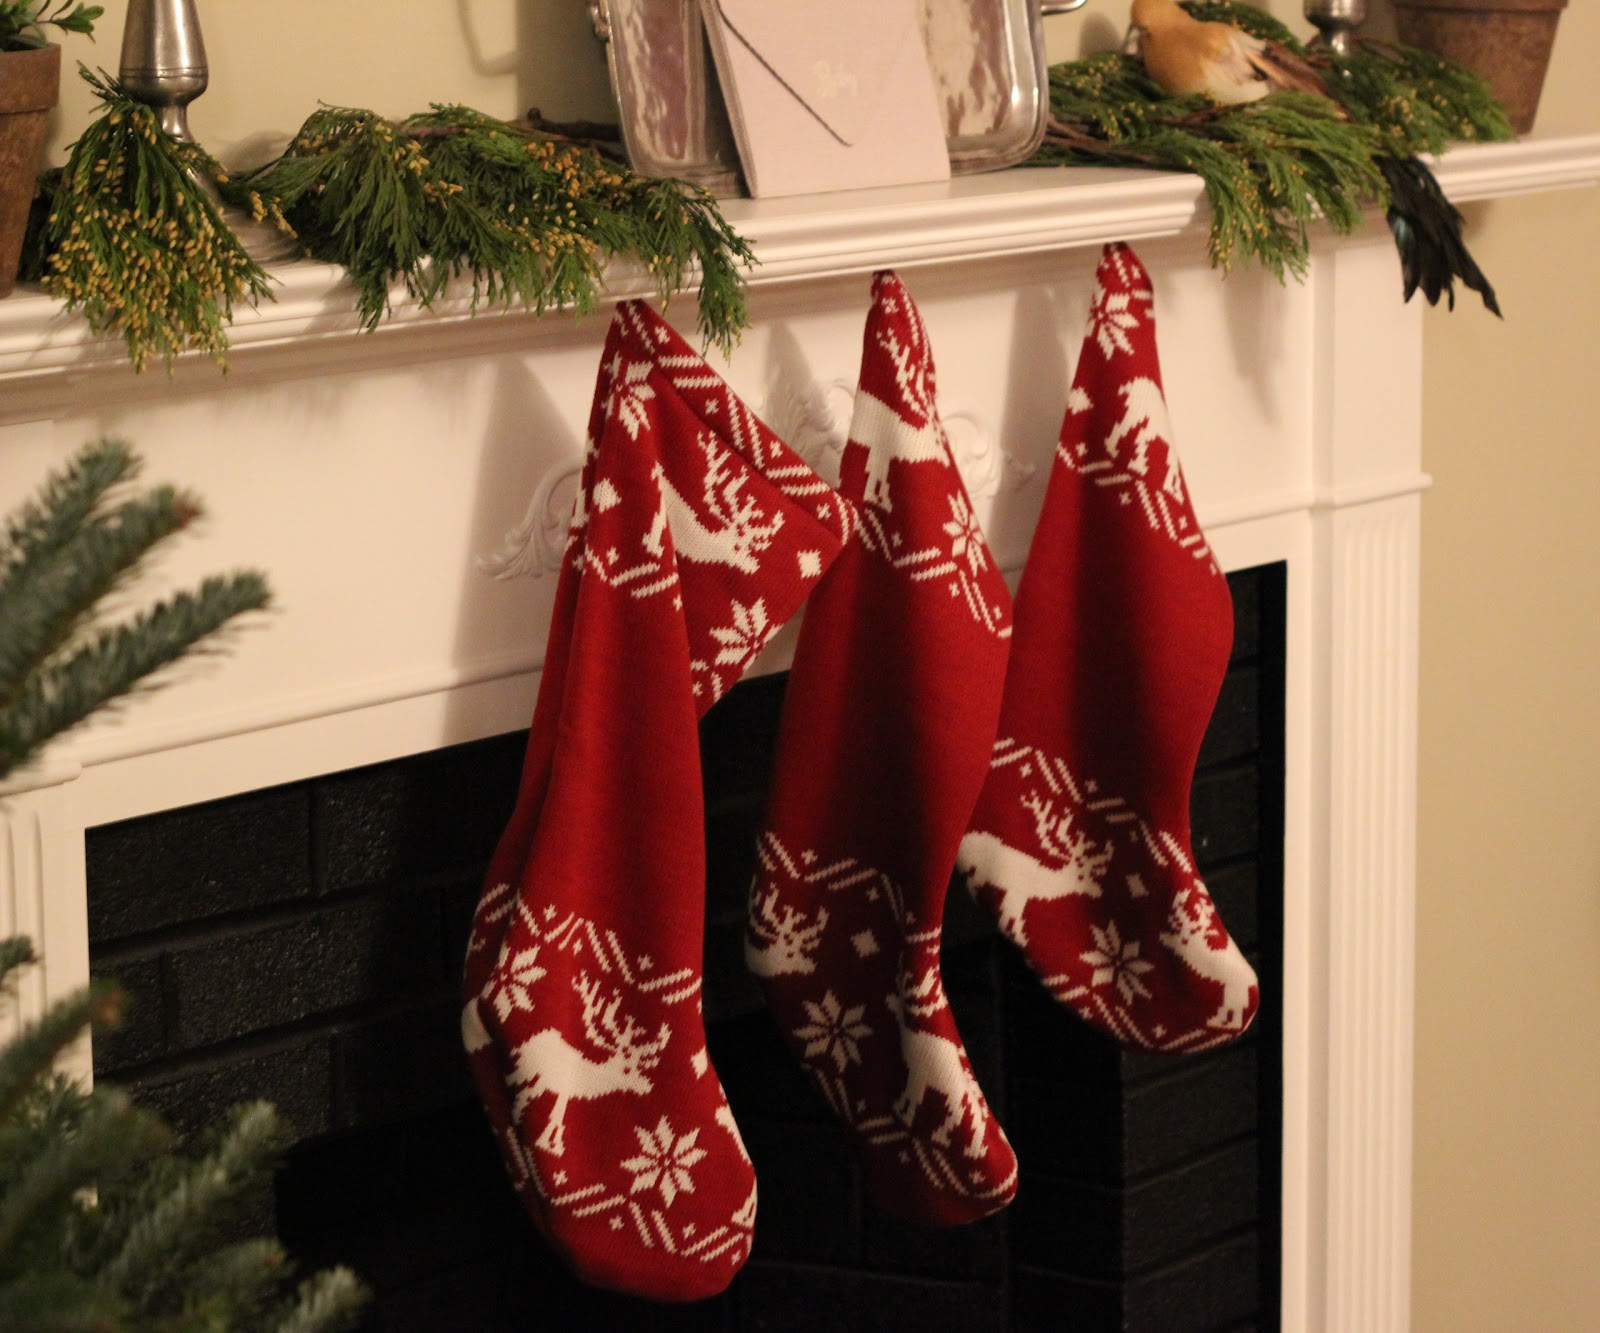 Free Knit Christmas Stocking Pattern 36 Free Knitted Patterns For Christmas Stockings Guide Patterns